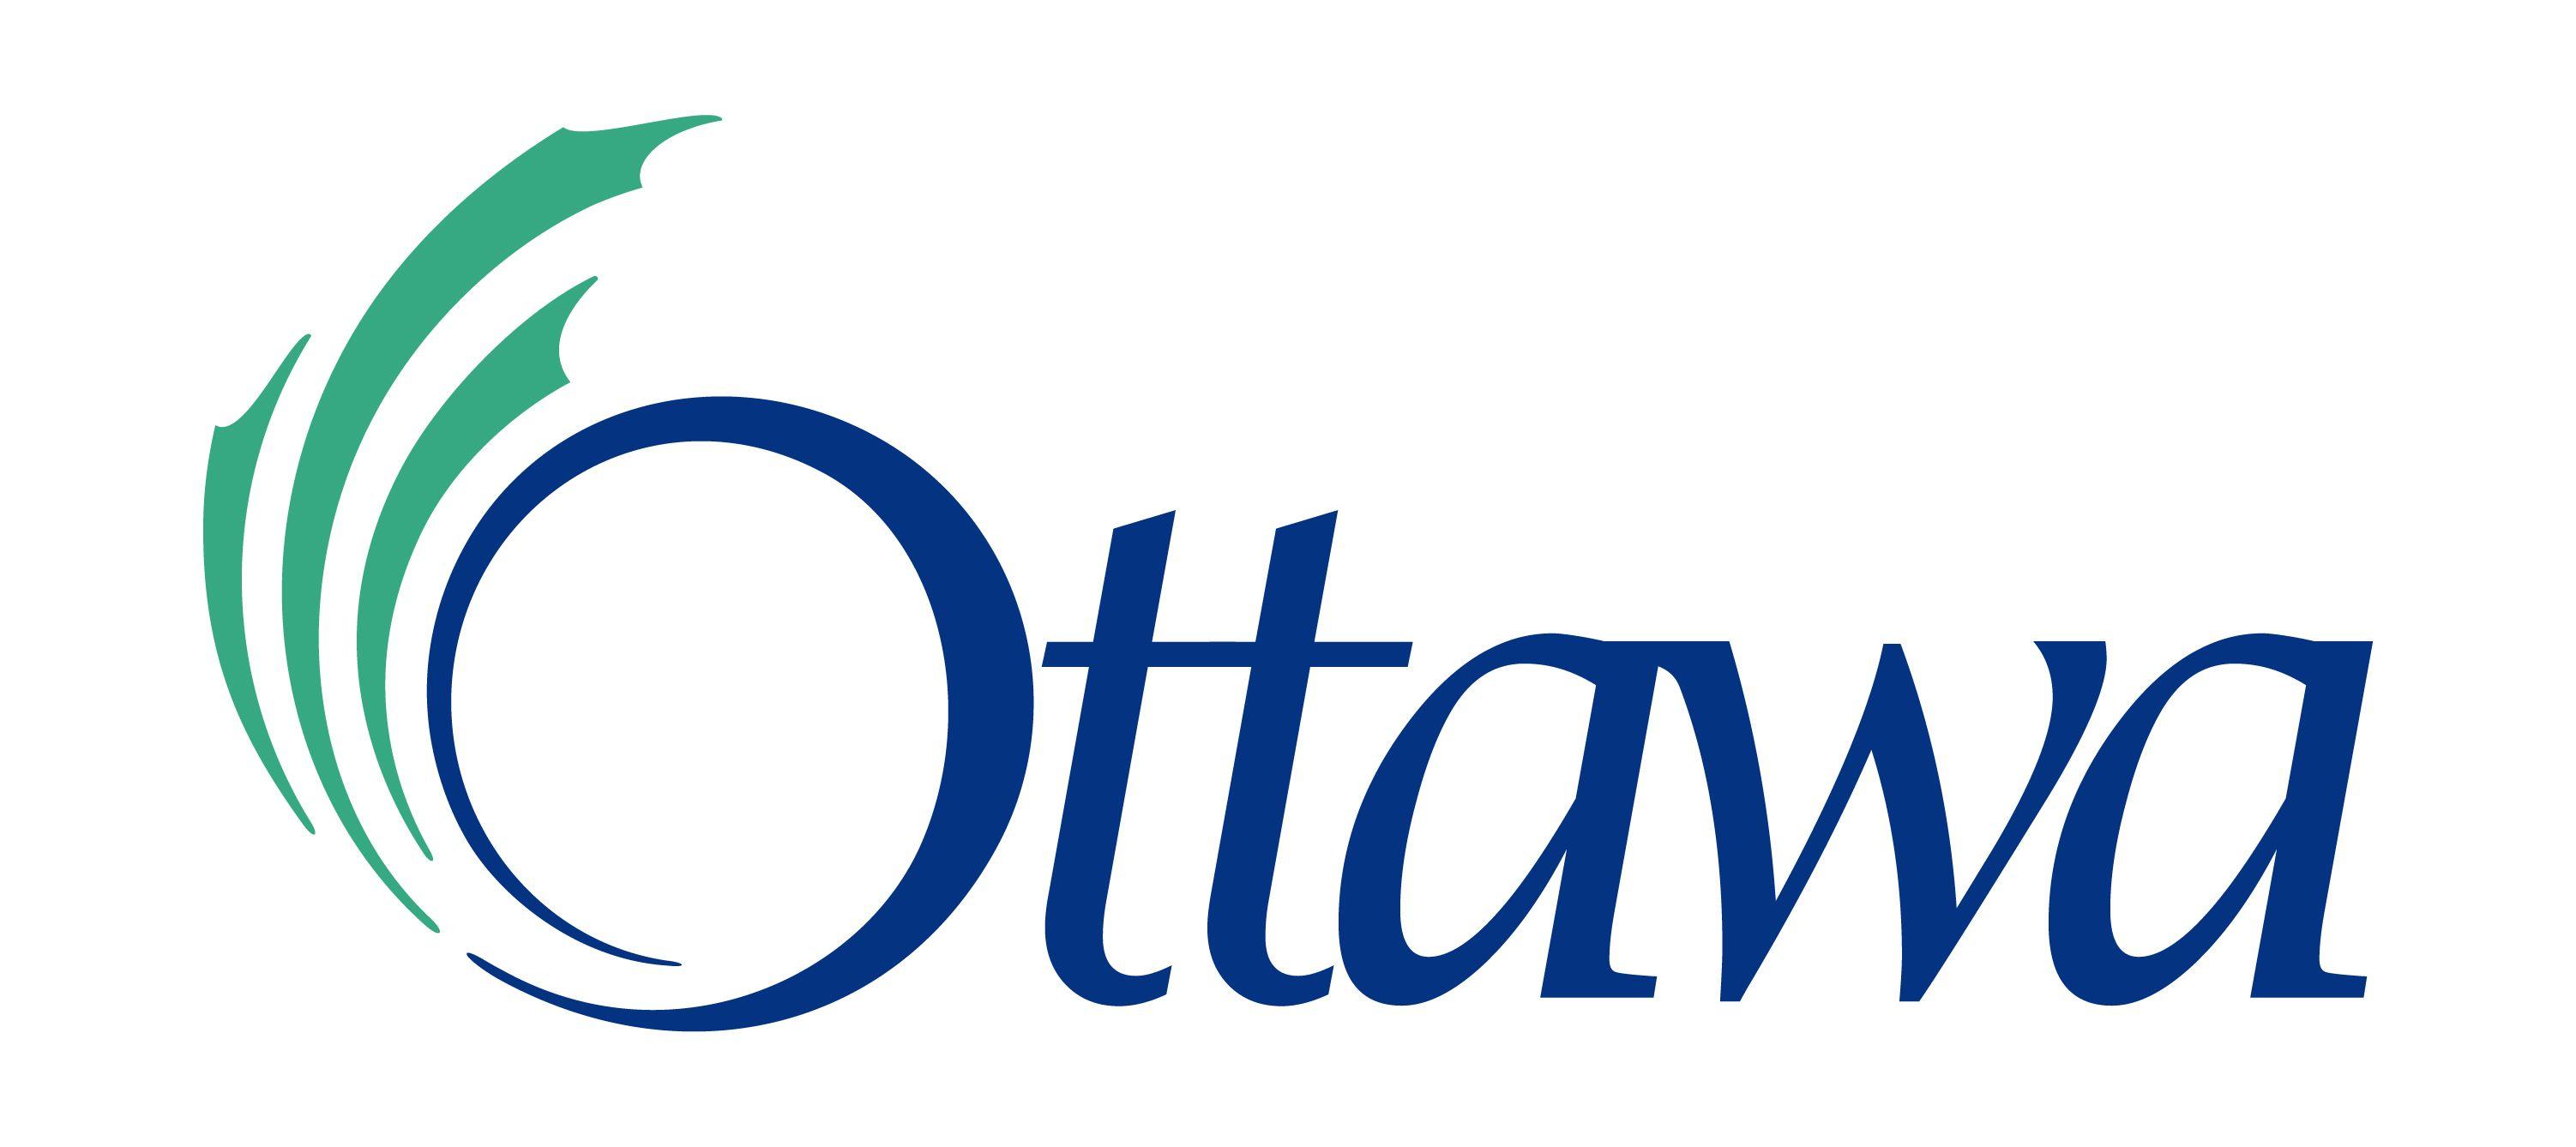 Ottawa Logo - Ottawa - Age-Friendly World